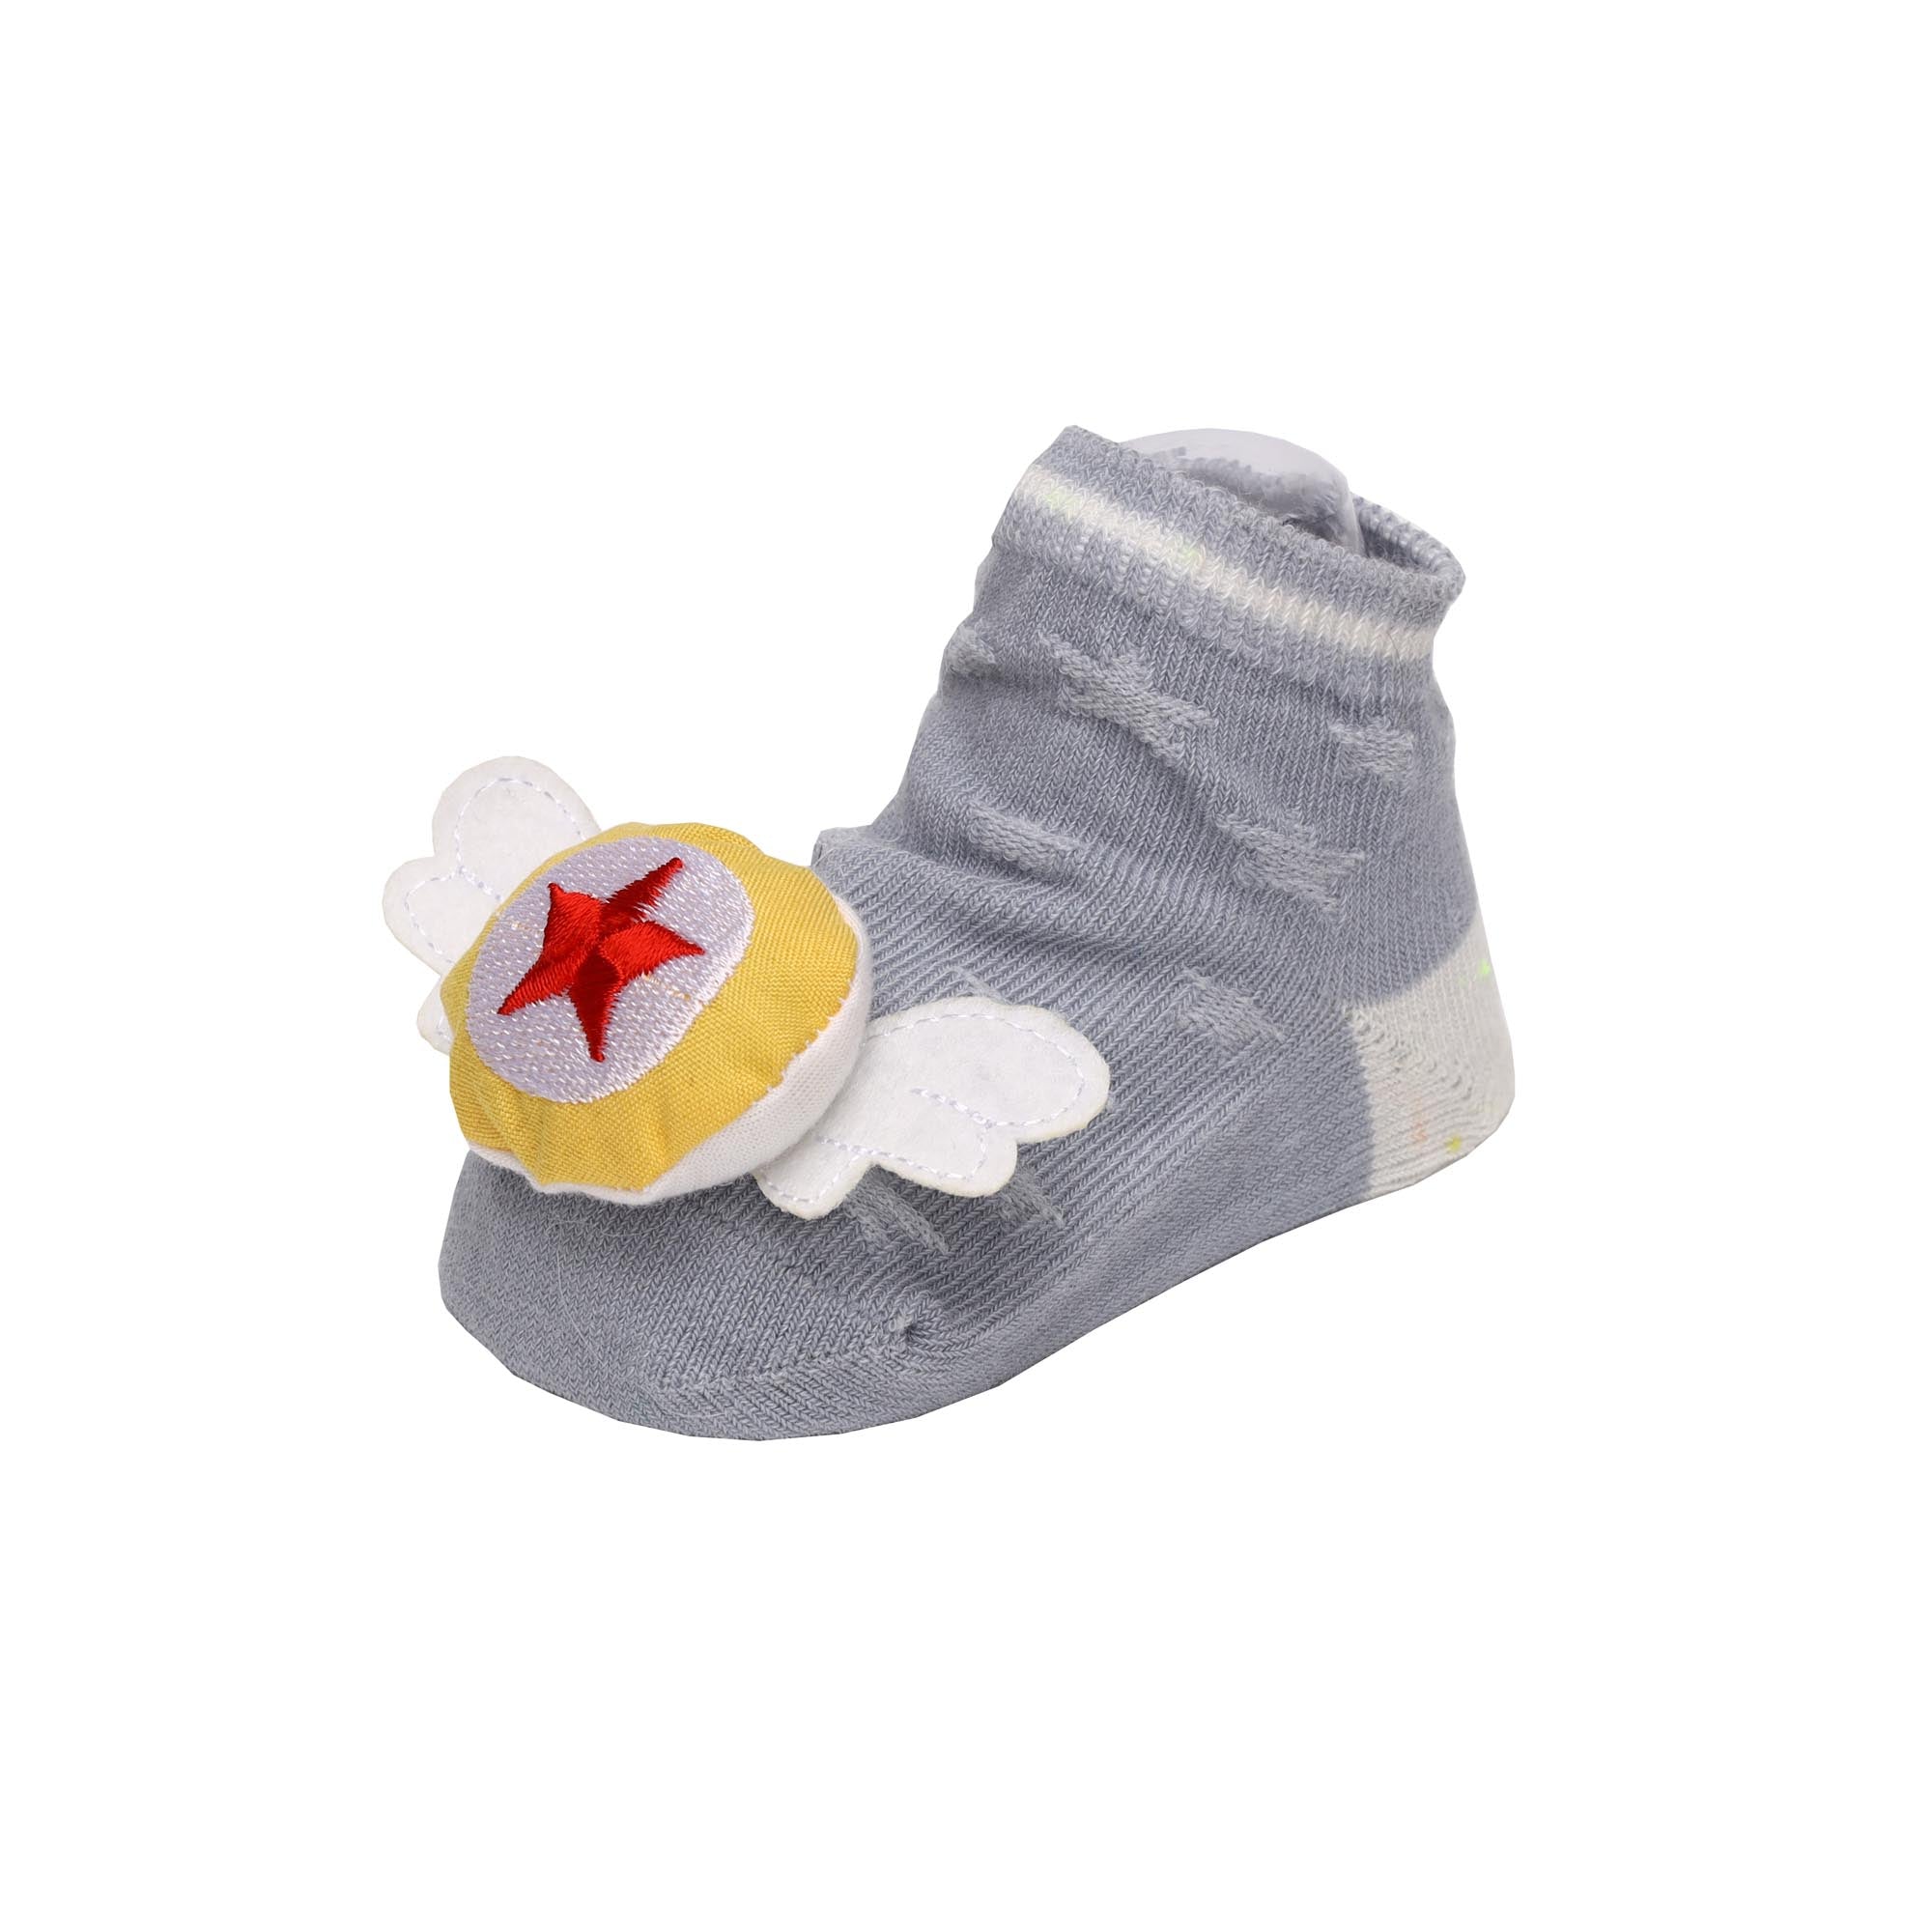 Magic Wings White & Grey 3D Socks- 2 Pack (0-12 Months)